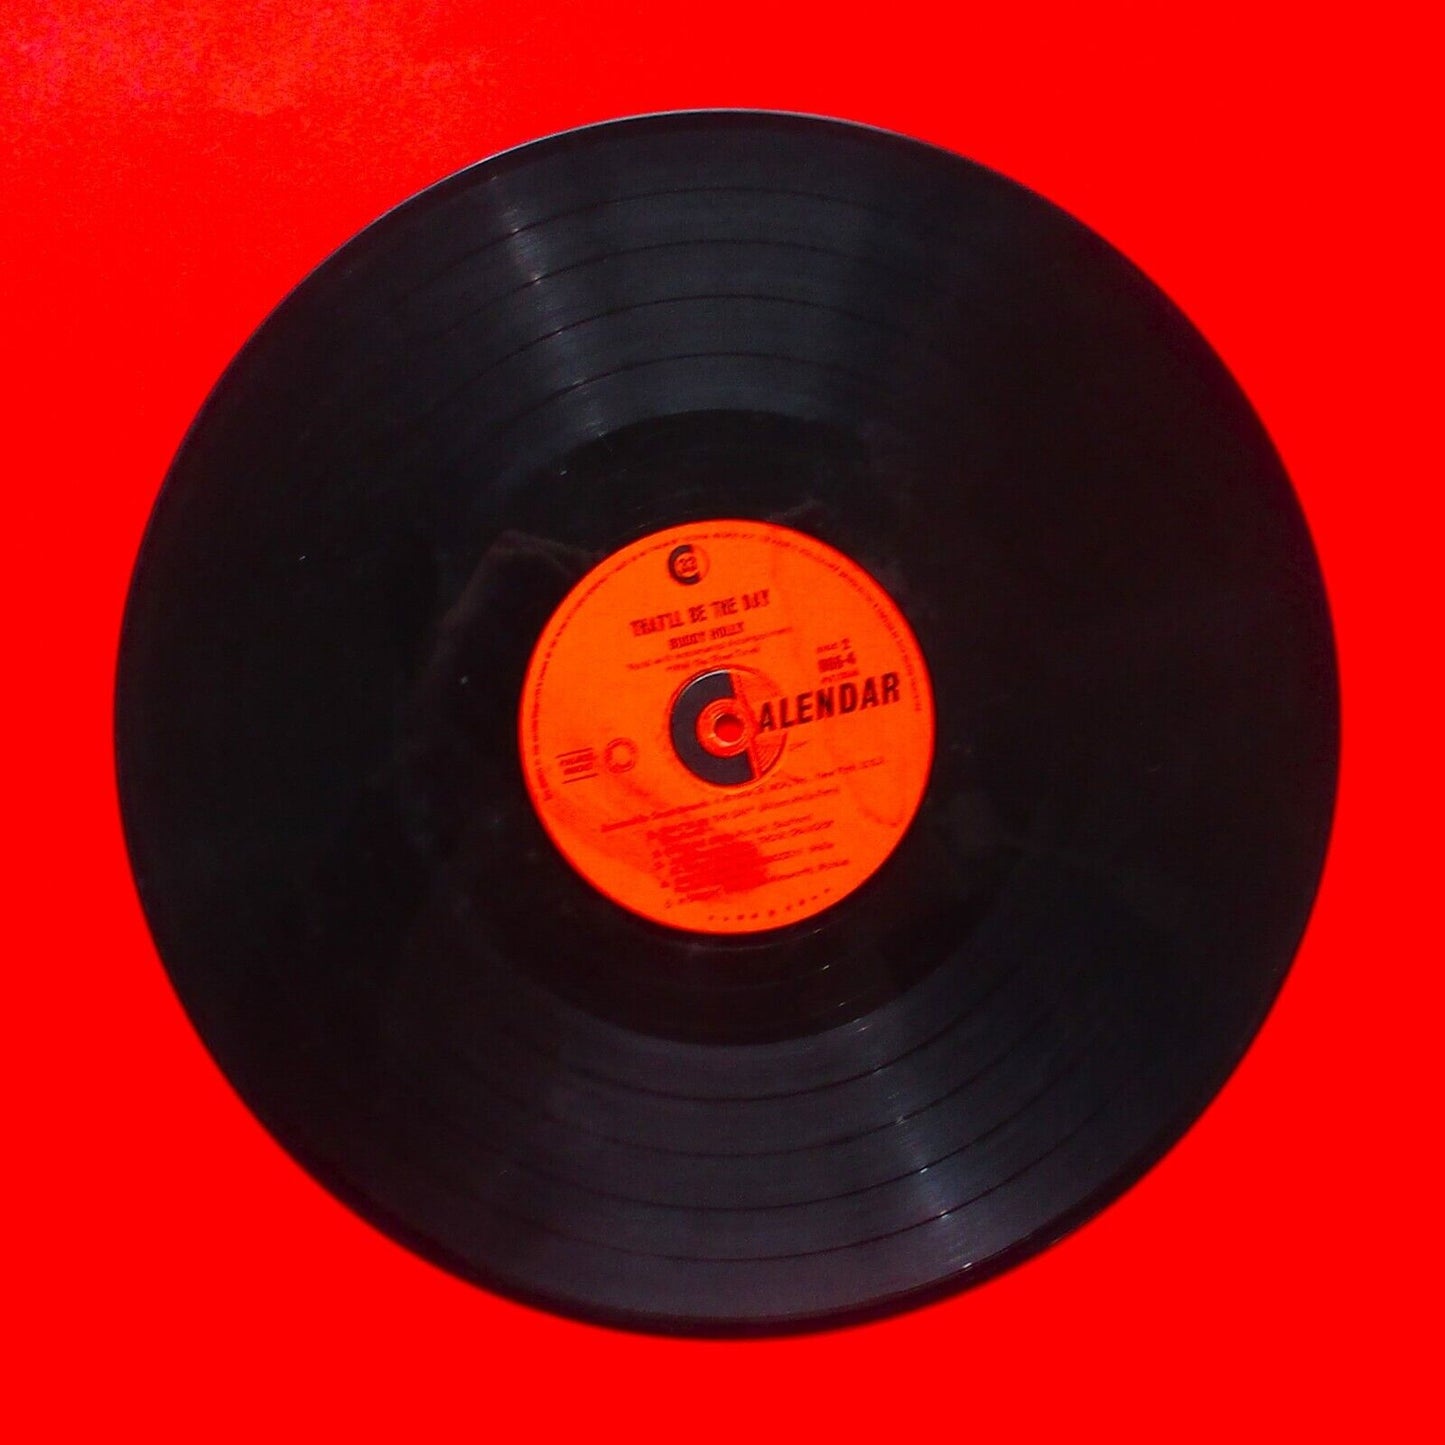 Buddy Holly ‎That'll Be The Day Vinyl Album LP 1966 Australian Mono